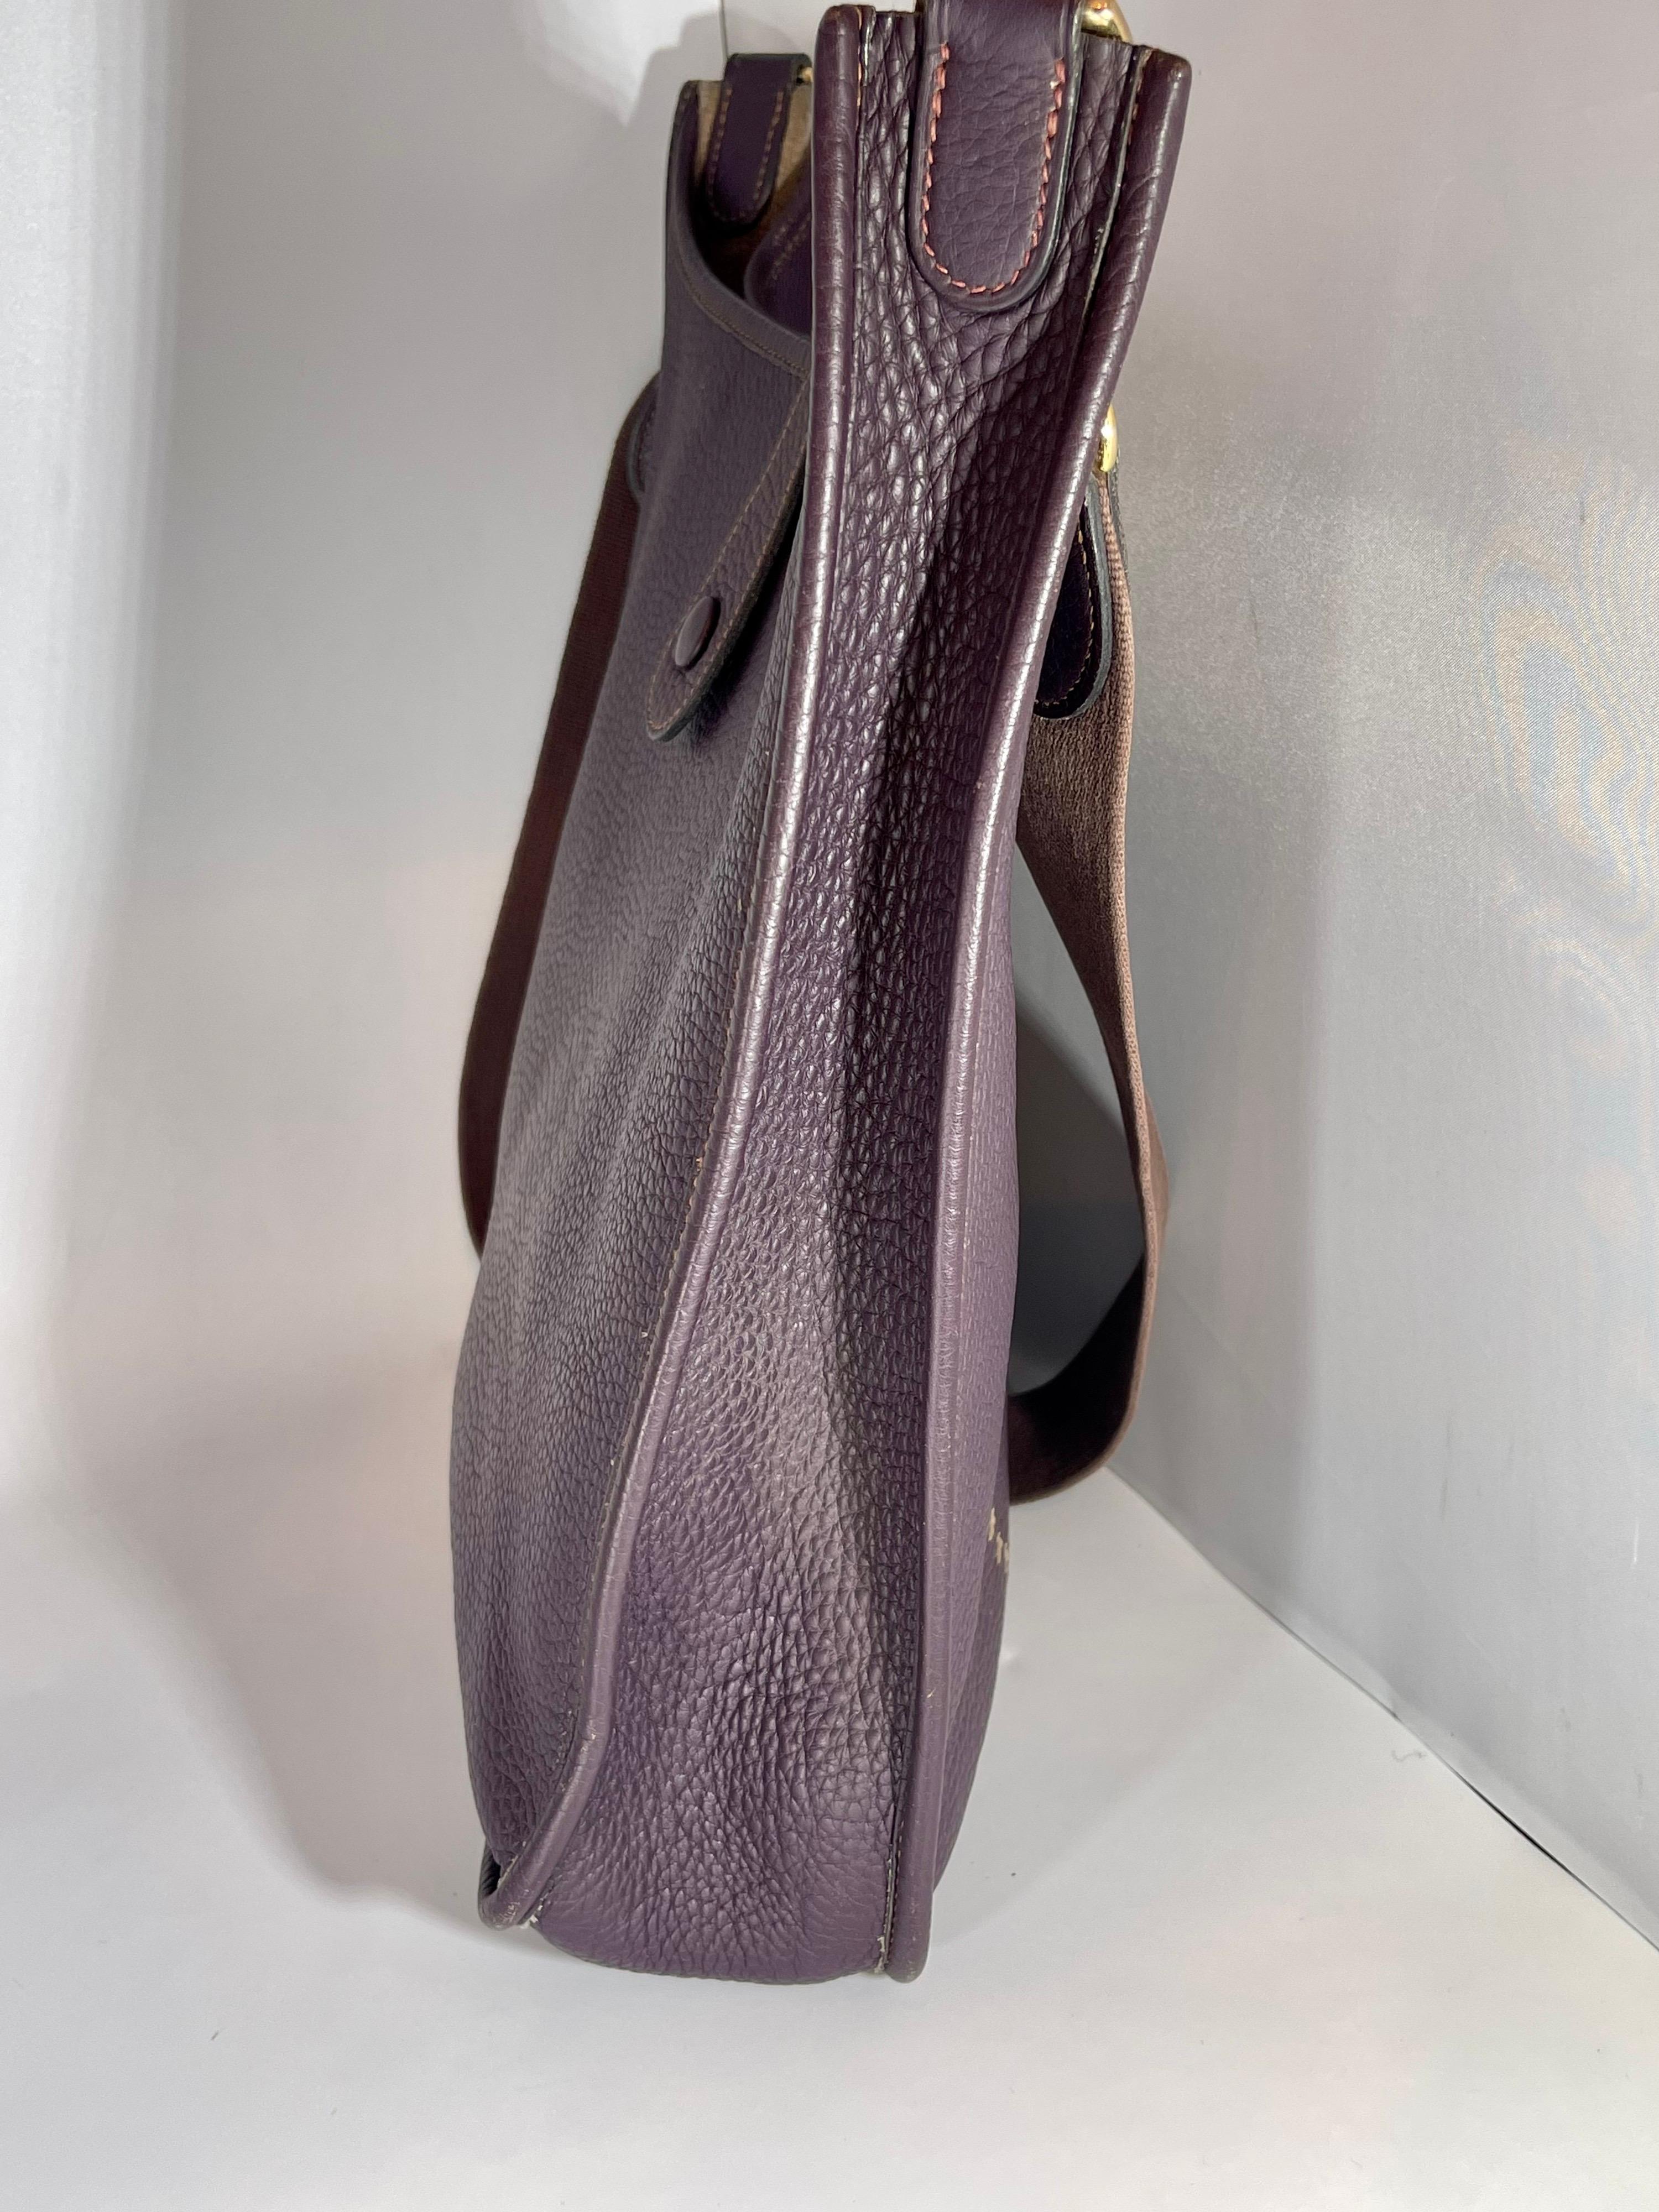 Hermès Evelyne Pm Dark Brown / Chocolate Leather Cross Body Bag Like New en vente 5